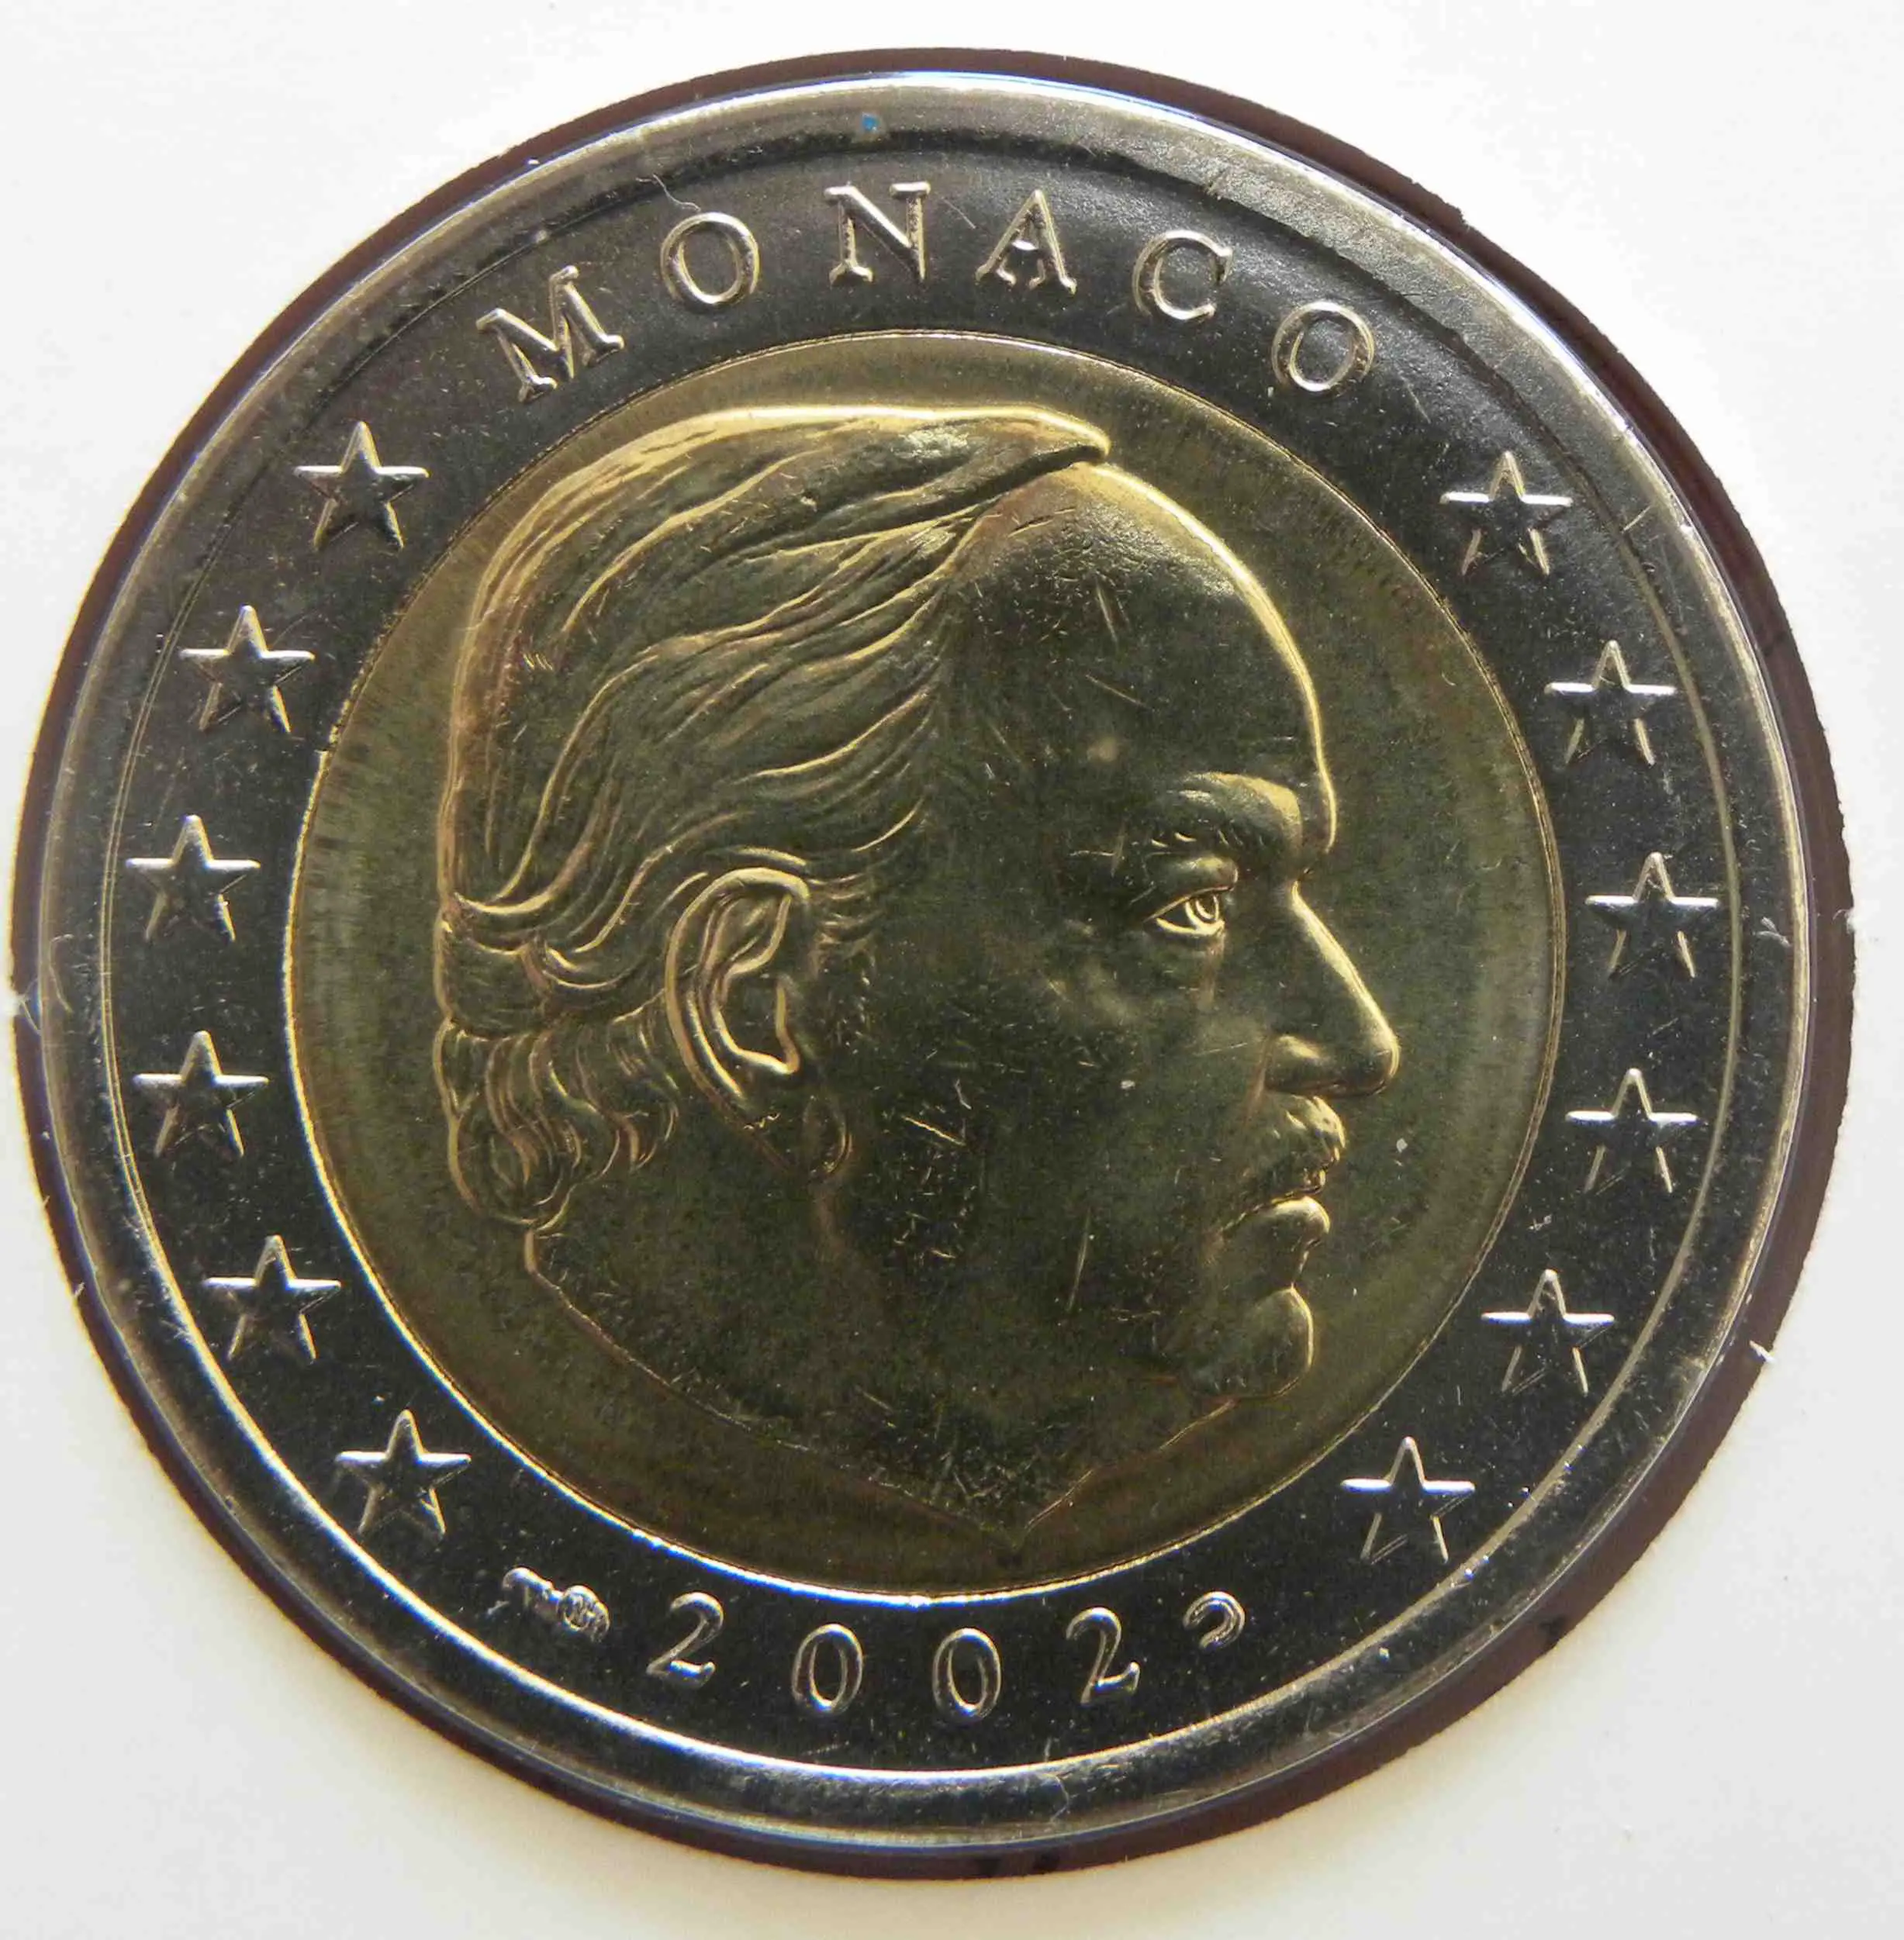 Monaco 2 Euro Münze 2002 - euro-muenzen.tv - Der Online Euromünzen Katalog